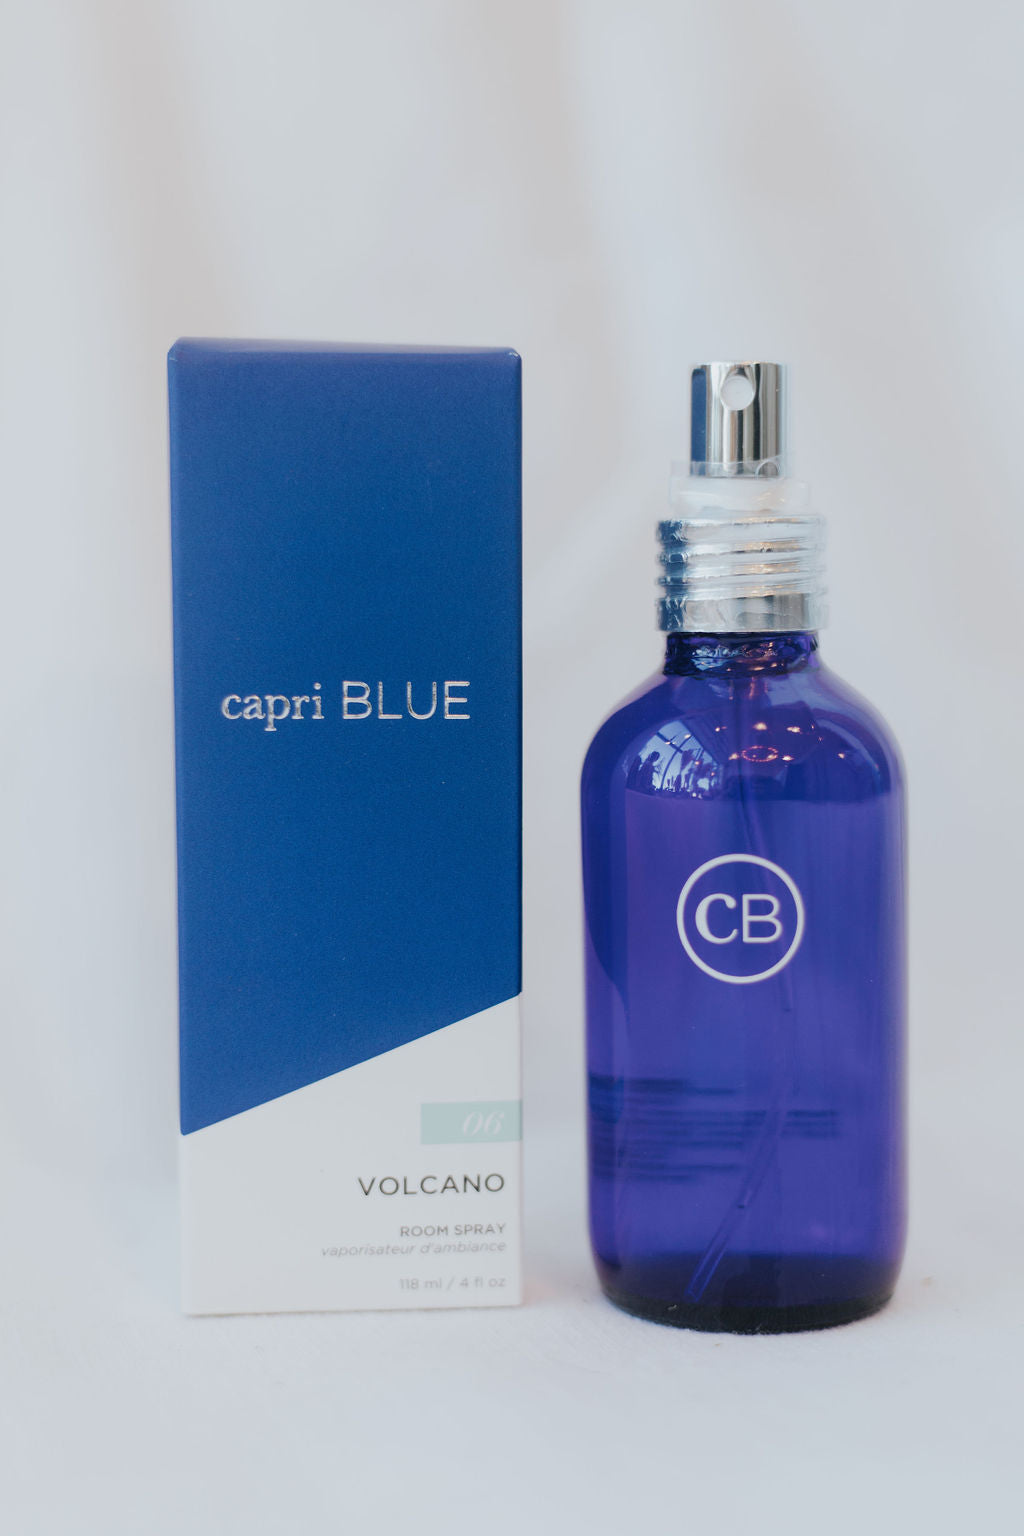 Capri Blue Volcano Room Spray 